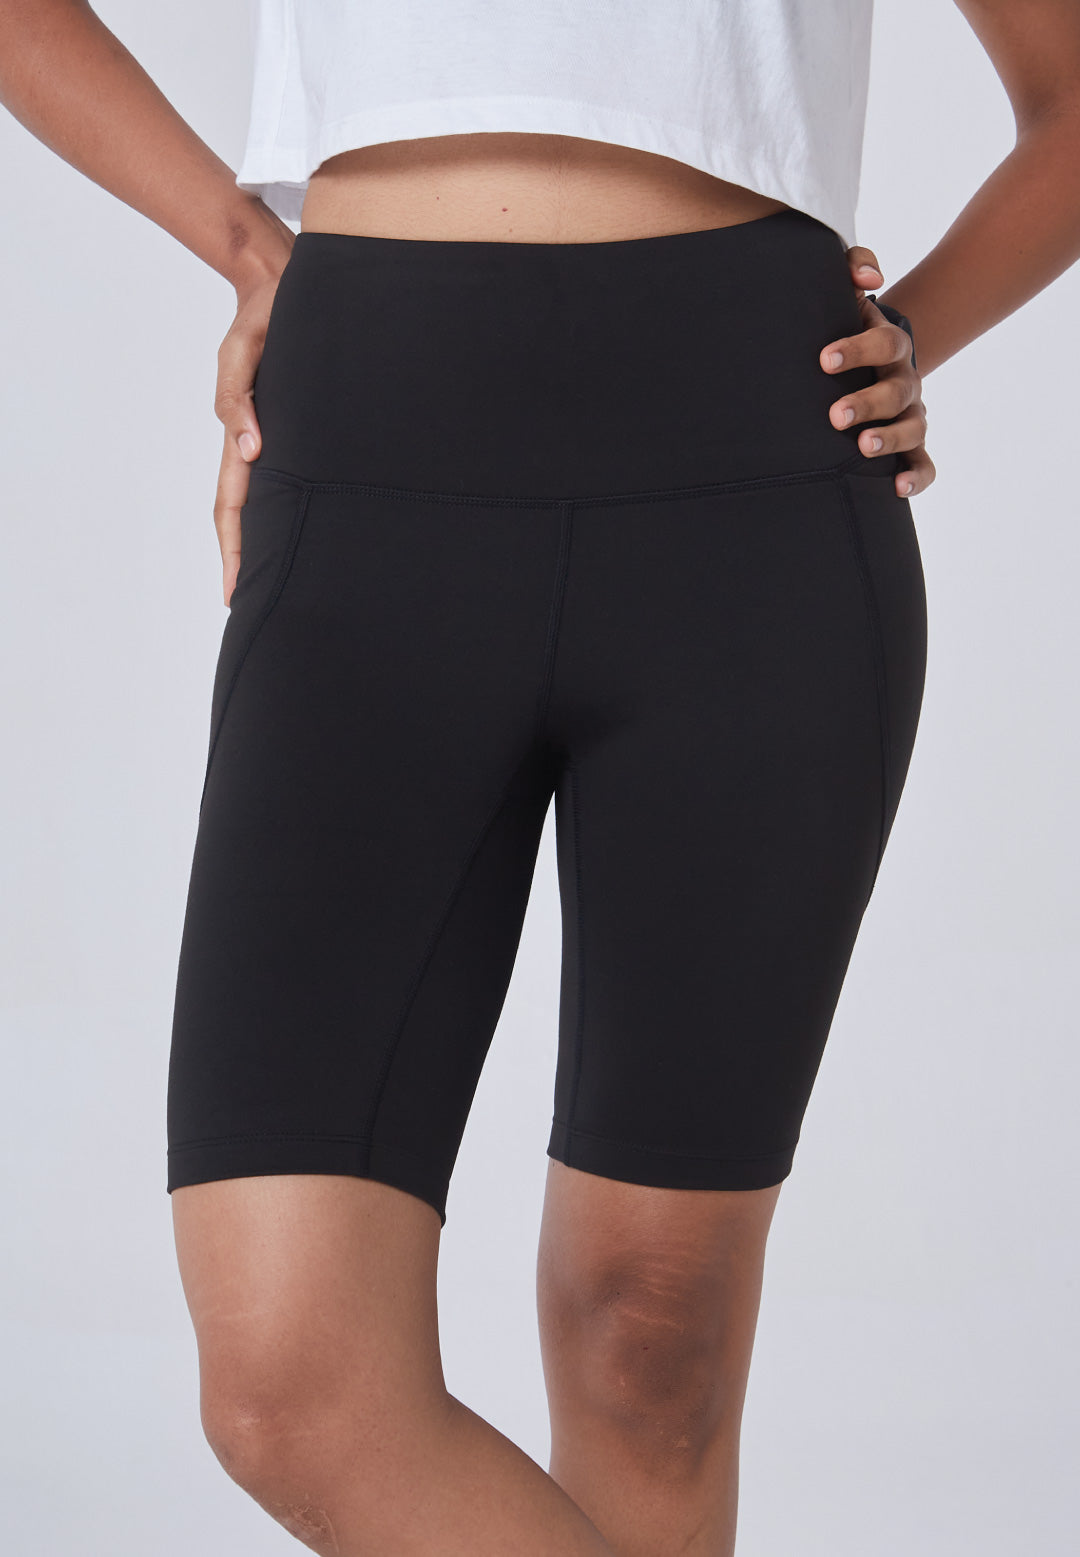 Black Shorts, Shop Women's Black Shorts Online